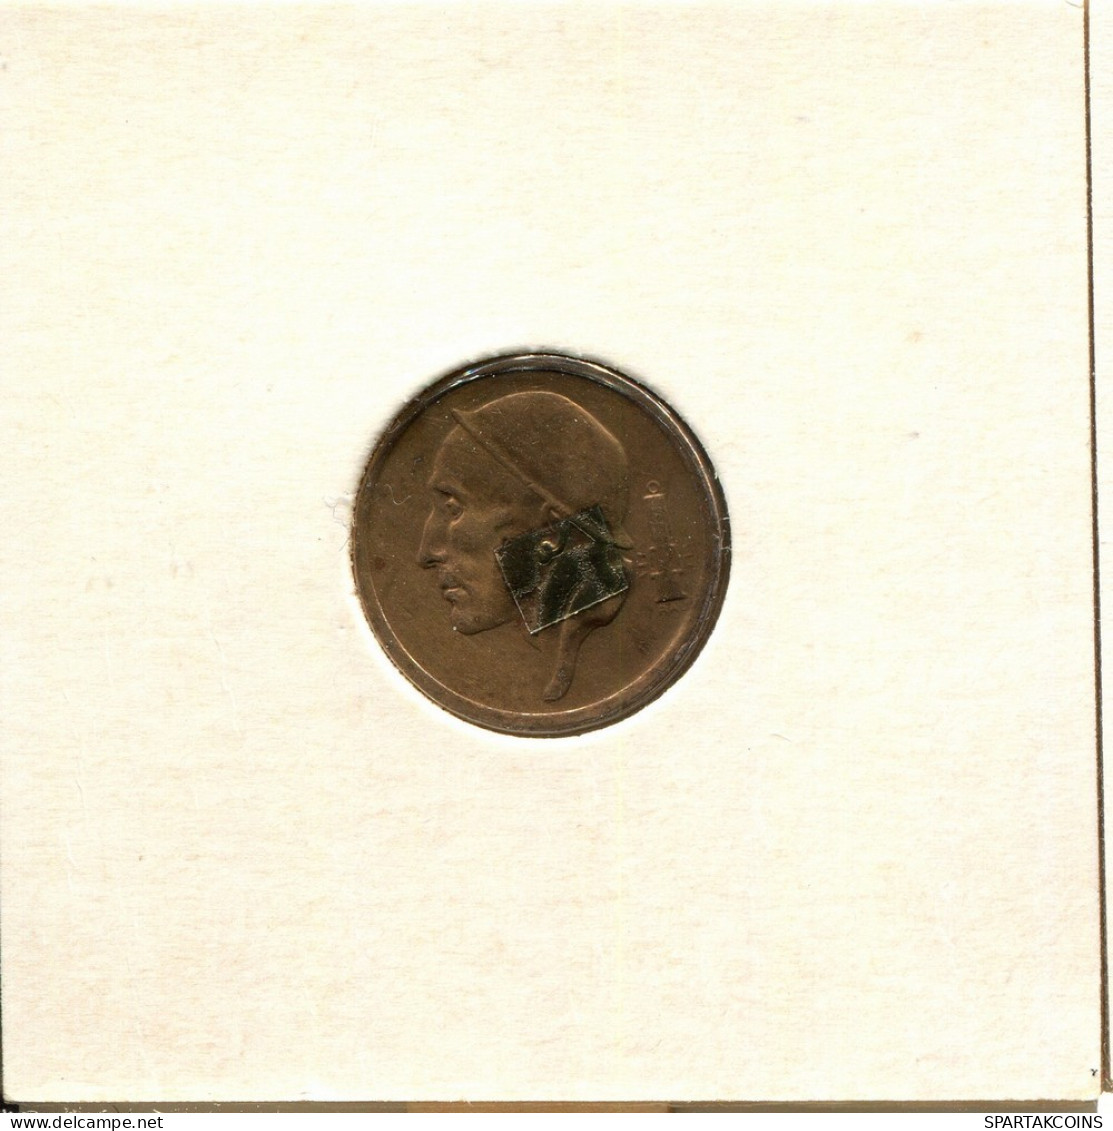 20 CENTIMES 1960 DUTCH Text BÉLGICA BELGIUM Moneda #BB149.E.A - 25 Cent